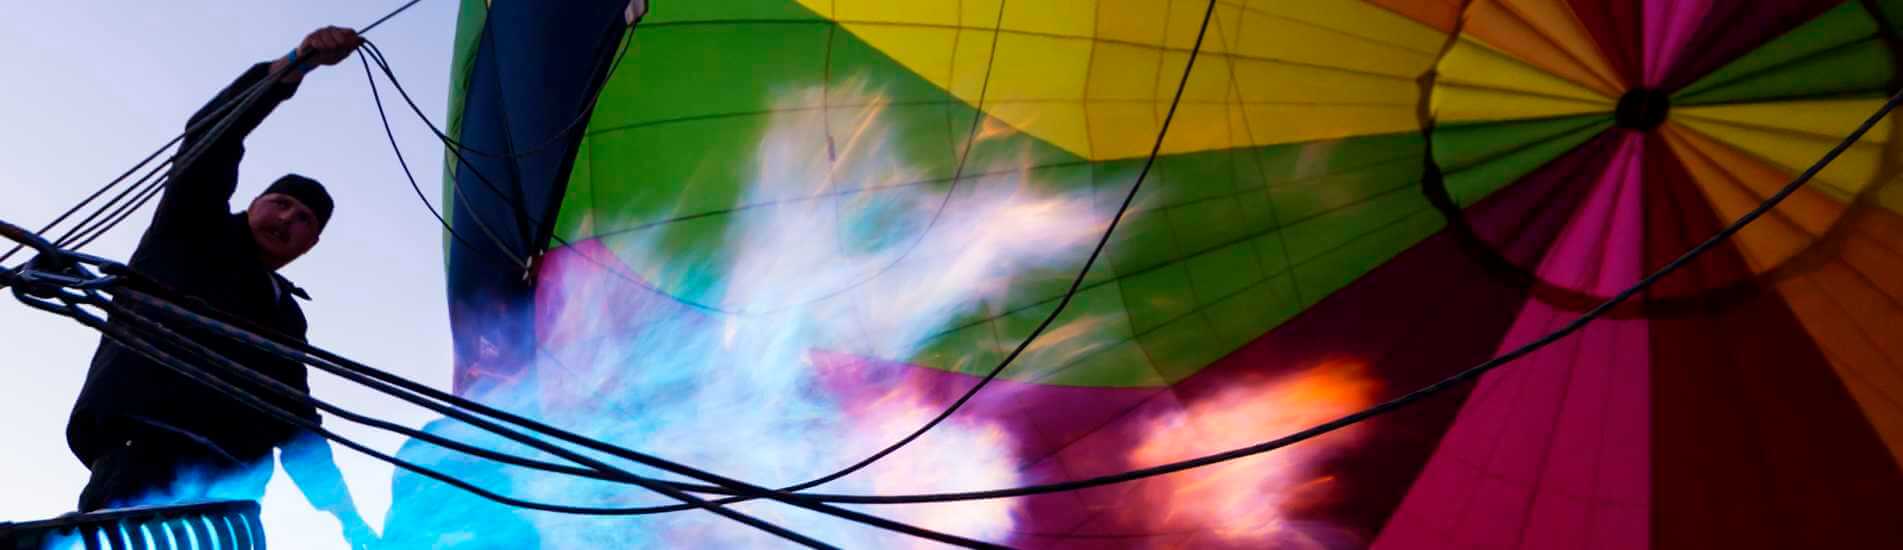 Get Above It All During The Albuquerque International Balloon Fiesta